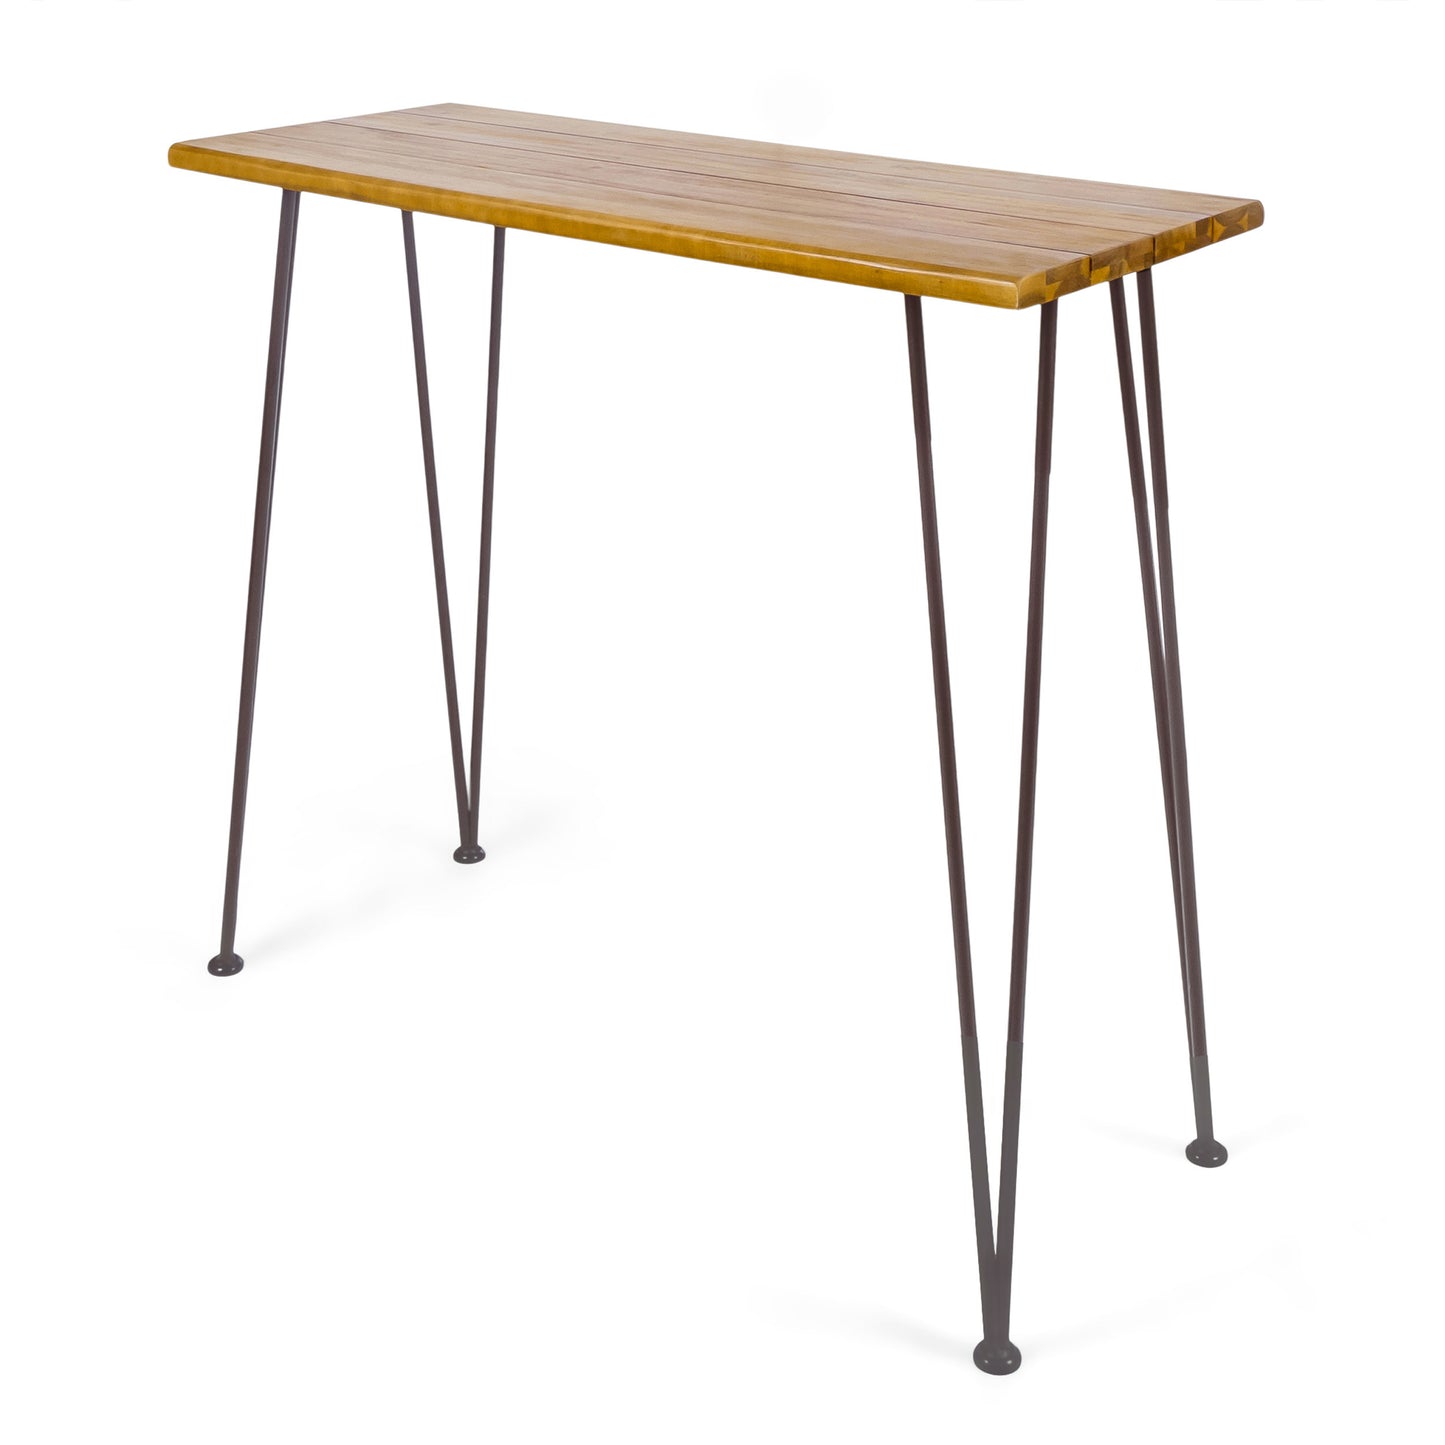 Avy Outdoor Rustic Industrial Acacia Wood Bar Table with Metal Hairpin Legs, Teak